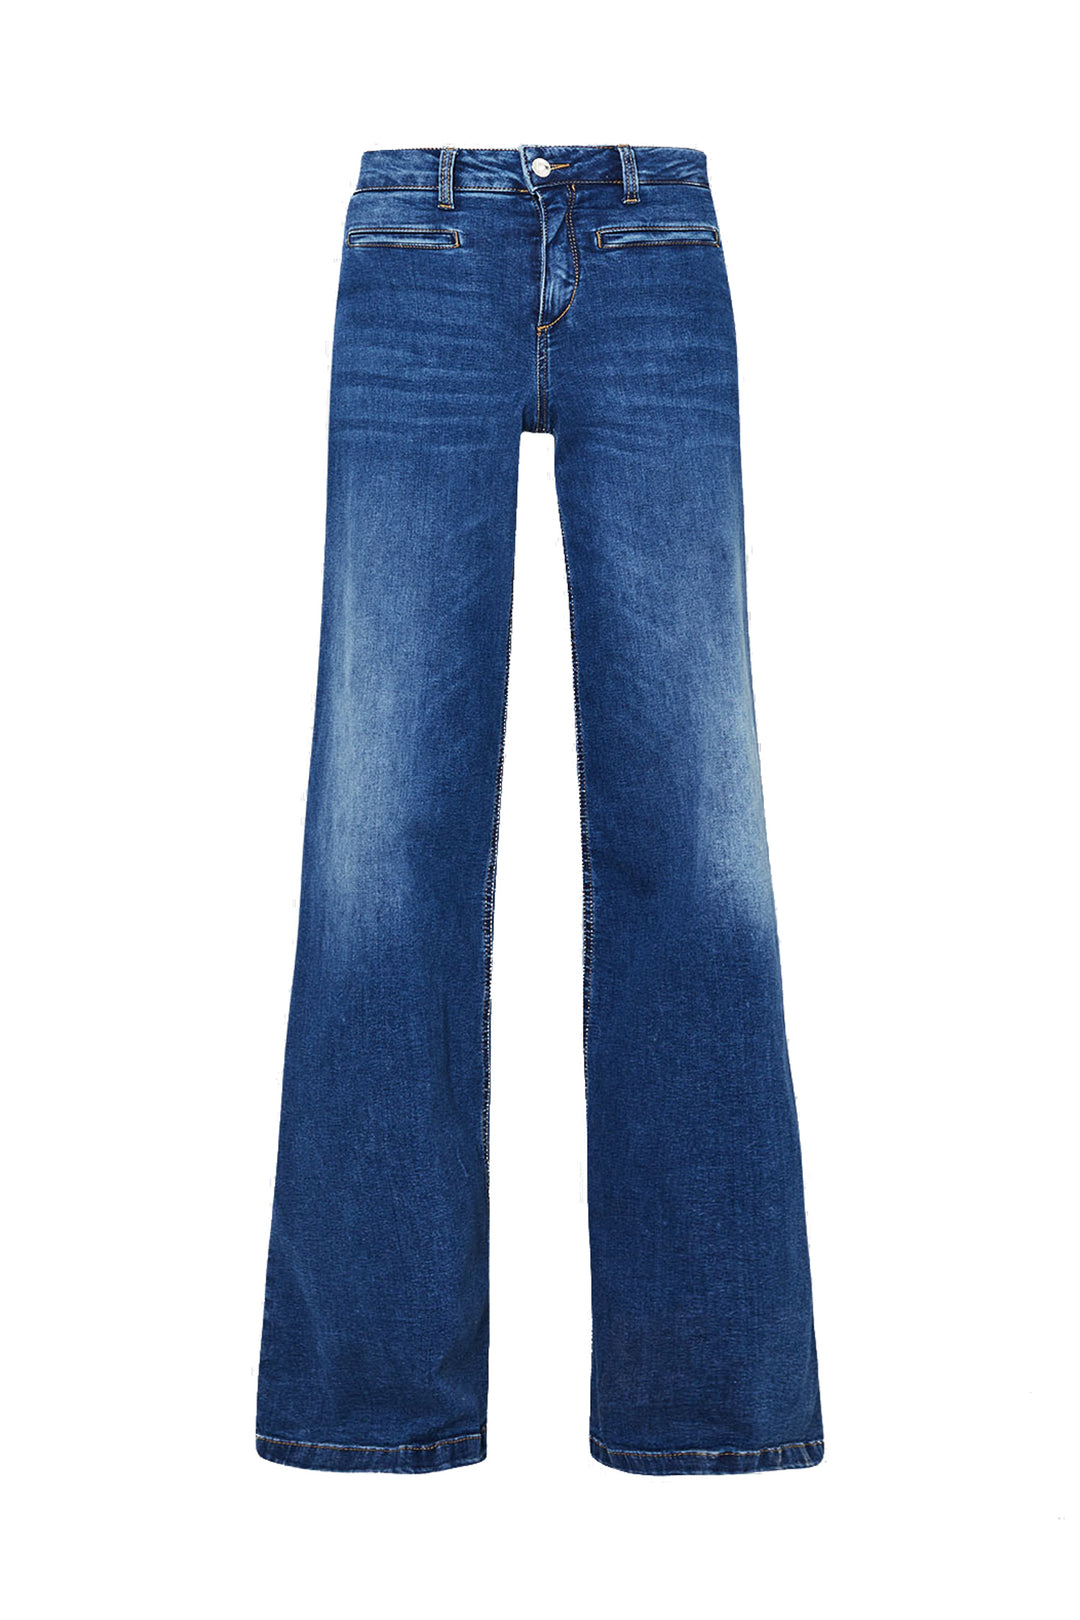 LIU JO Jeans flare ecosostenibile in denim stretch scuro - Mancinelli 1954